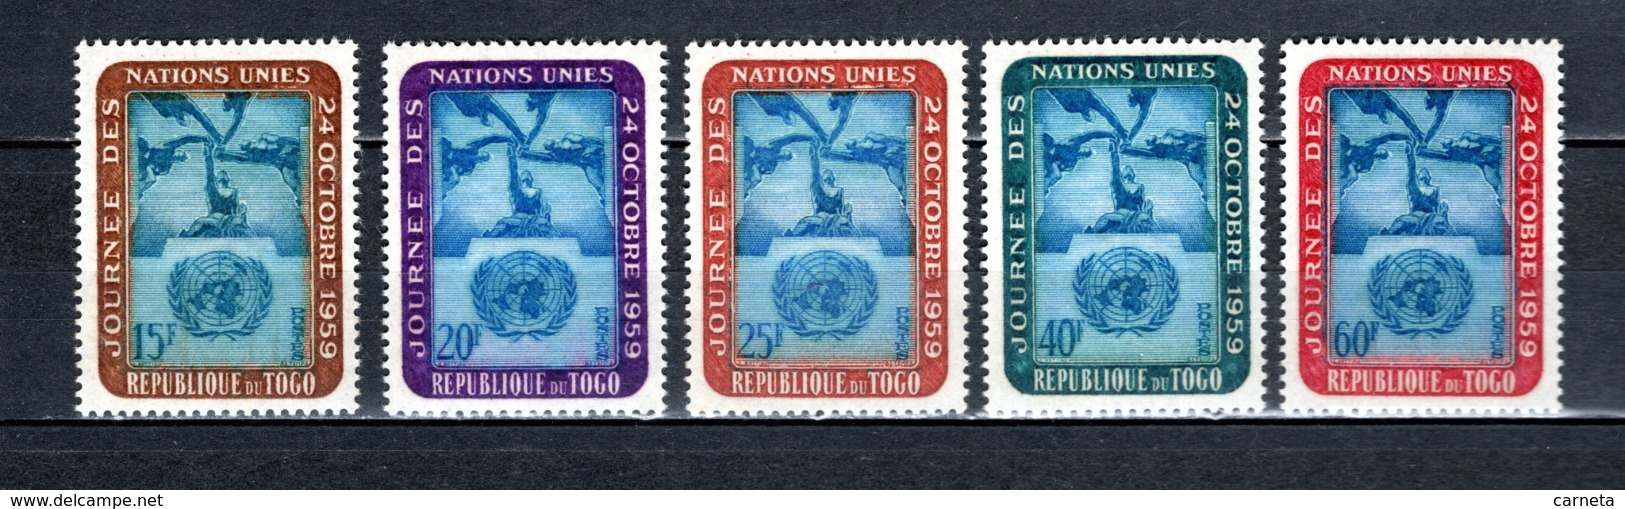 TOGO N° 295 à 299   NEUFS SANS CHARNIERE COTE  4.00€  NATIONS UNIES - Togo (1960-...)